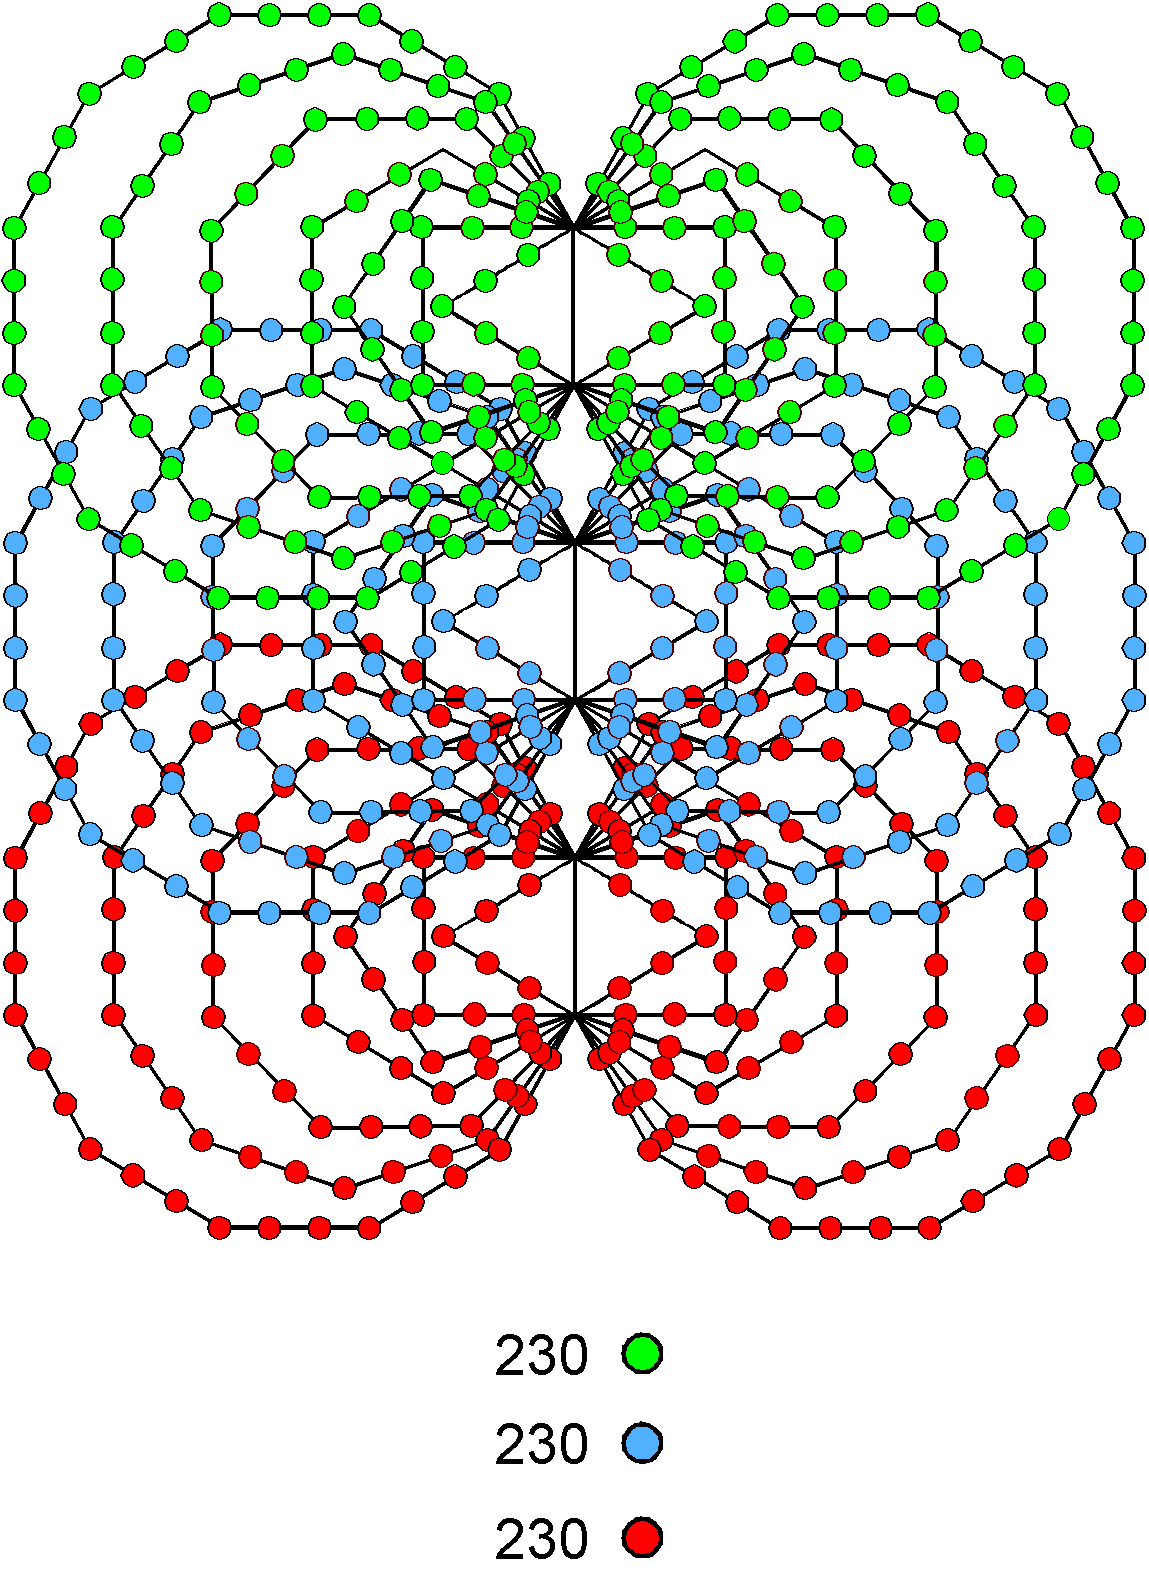 230 boundary yods per set of 14 enfolded polygons